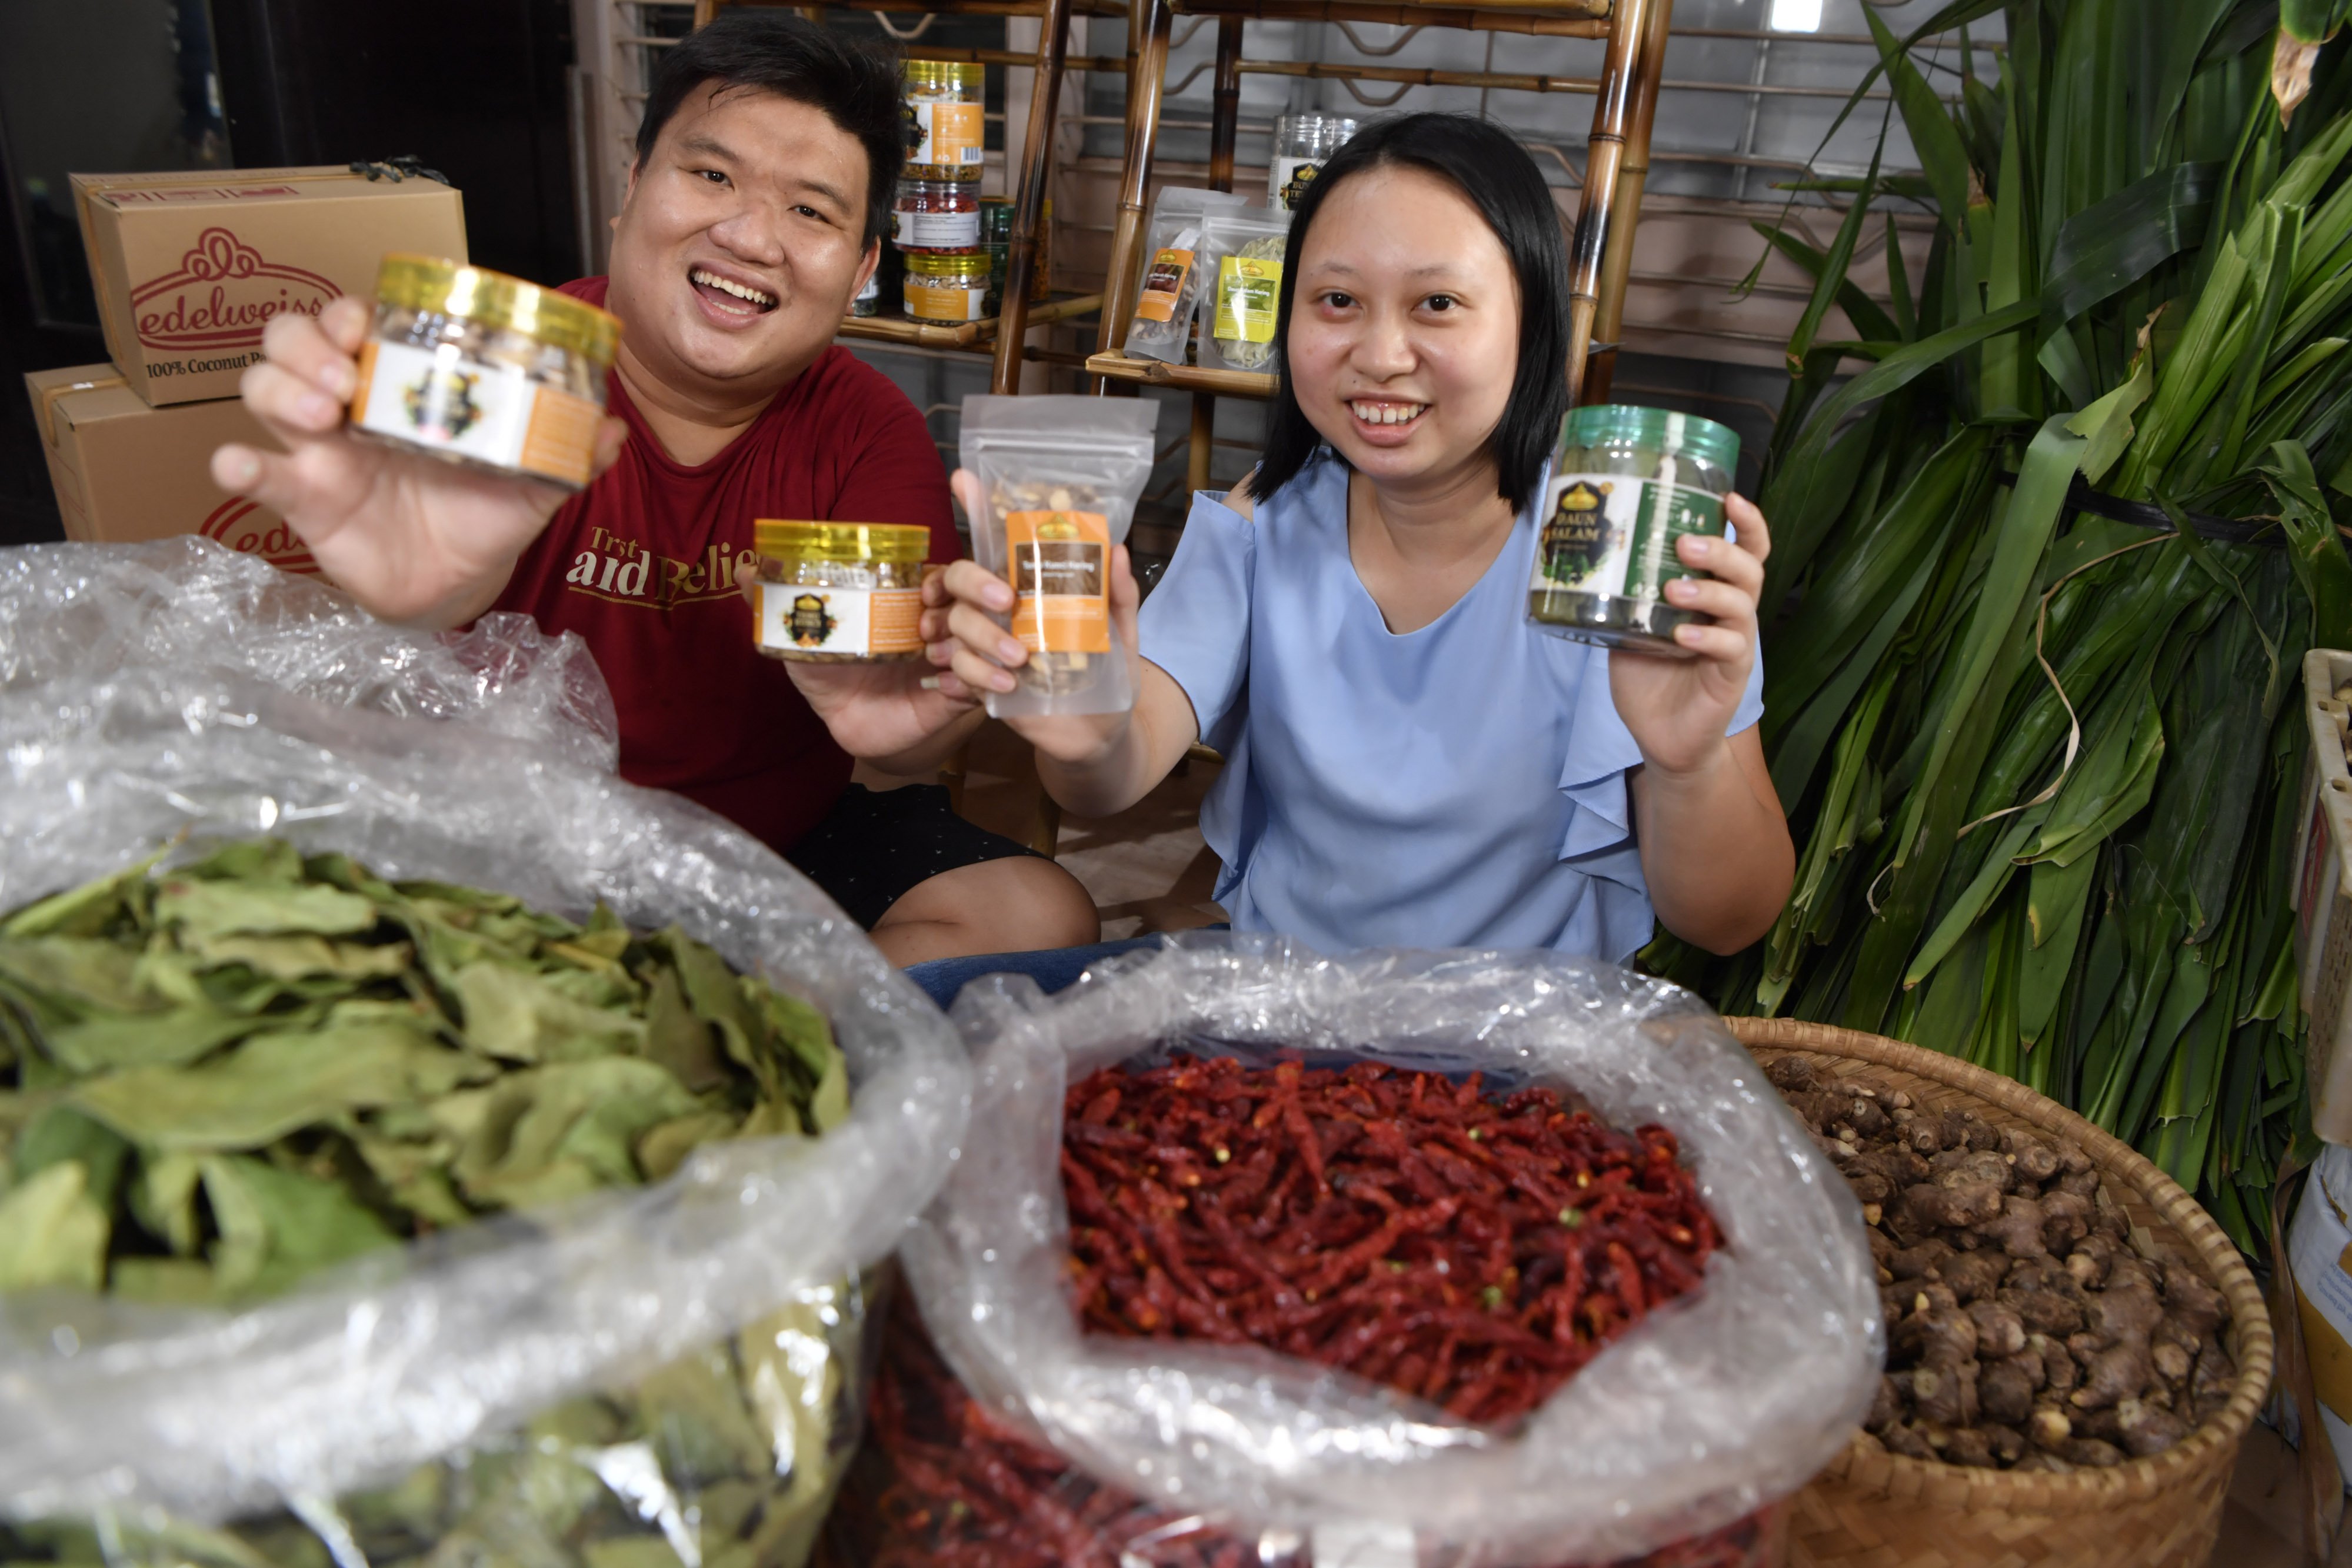 Aloysia Kurniadi dan Rudy Eko Yulianto. Pasangan suami istri asal Madiun, Jawa Timur memperlihatkan produk bumbu dapur kering berbahan dasar rempah-rempah yang bernilai ekonomi di UMKM Edelweis yang mengkhususkan produksi rempah kering.